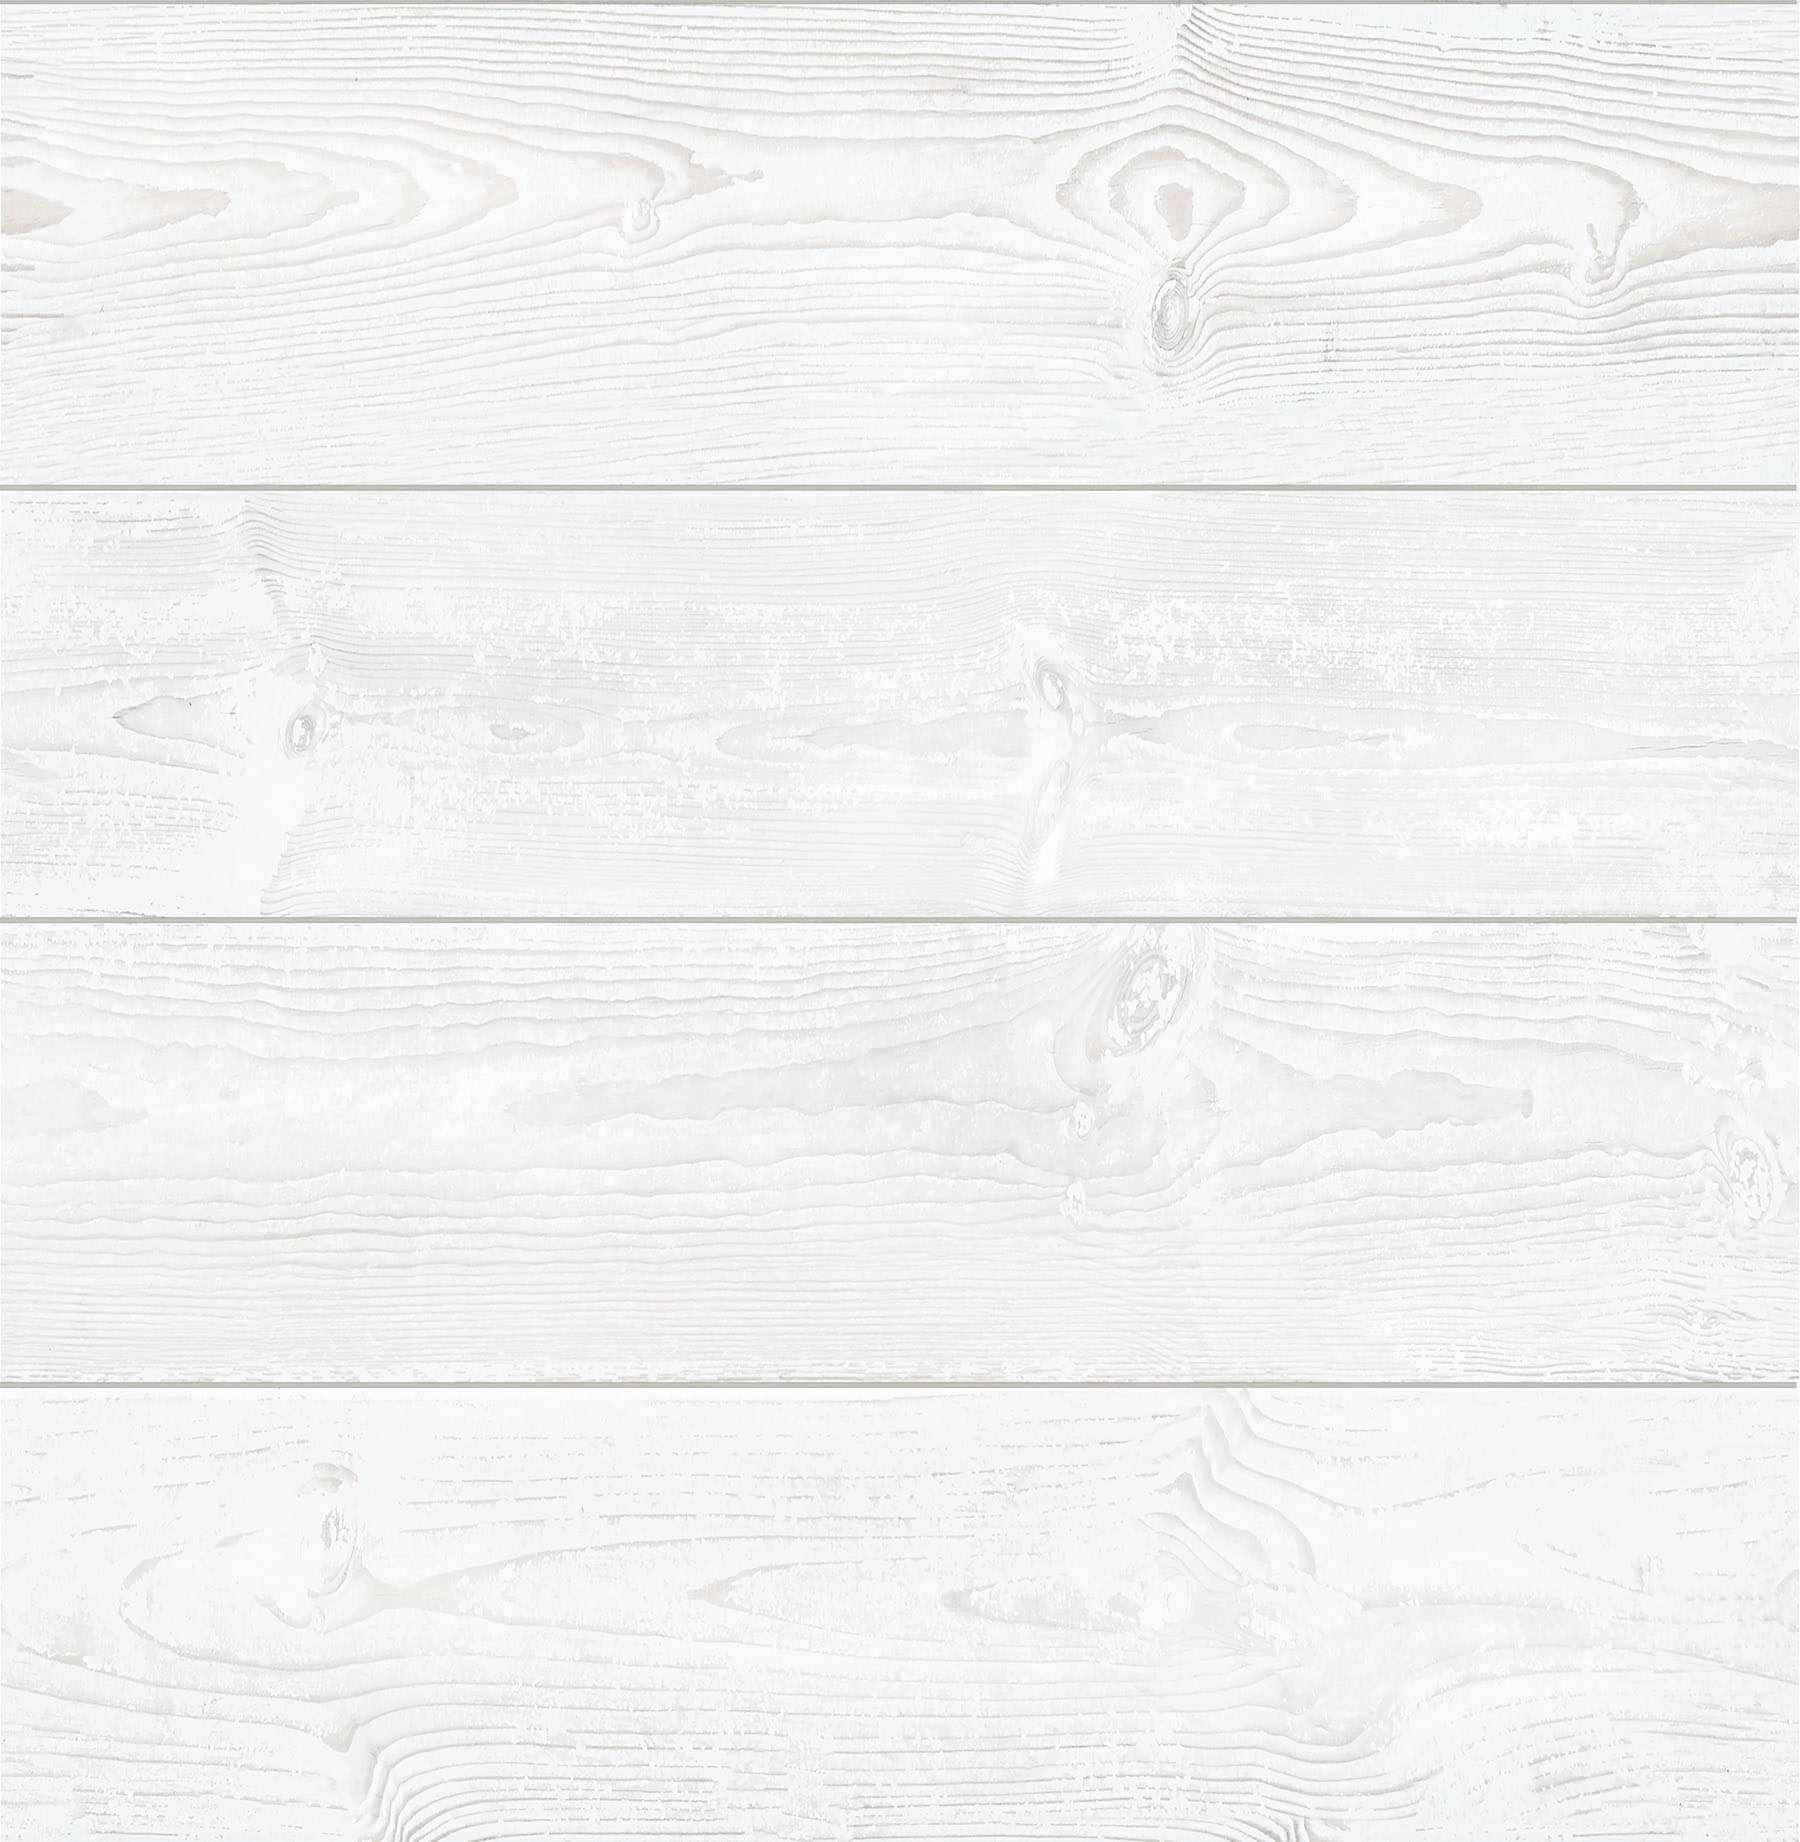 Wollzo Wooden Look Self Adhesive WallpaperMulticolour 45 x 500 cm   Amazonin Home Improvement